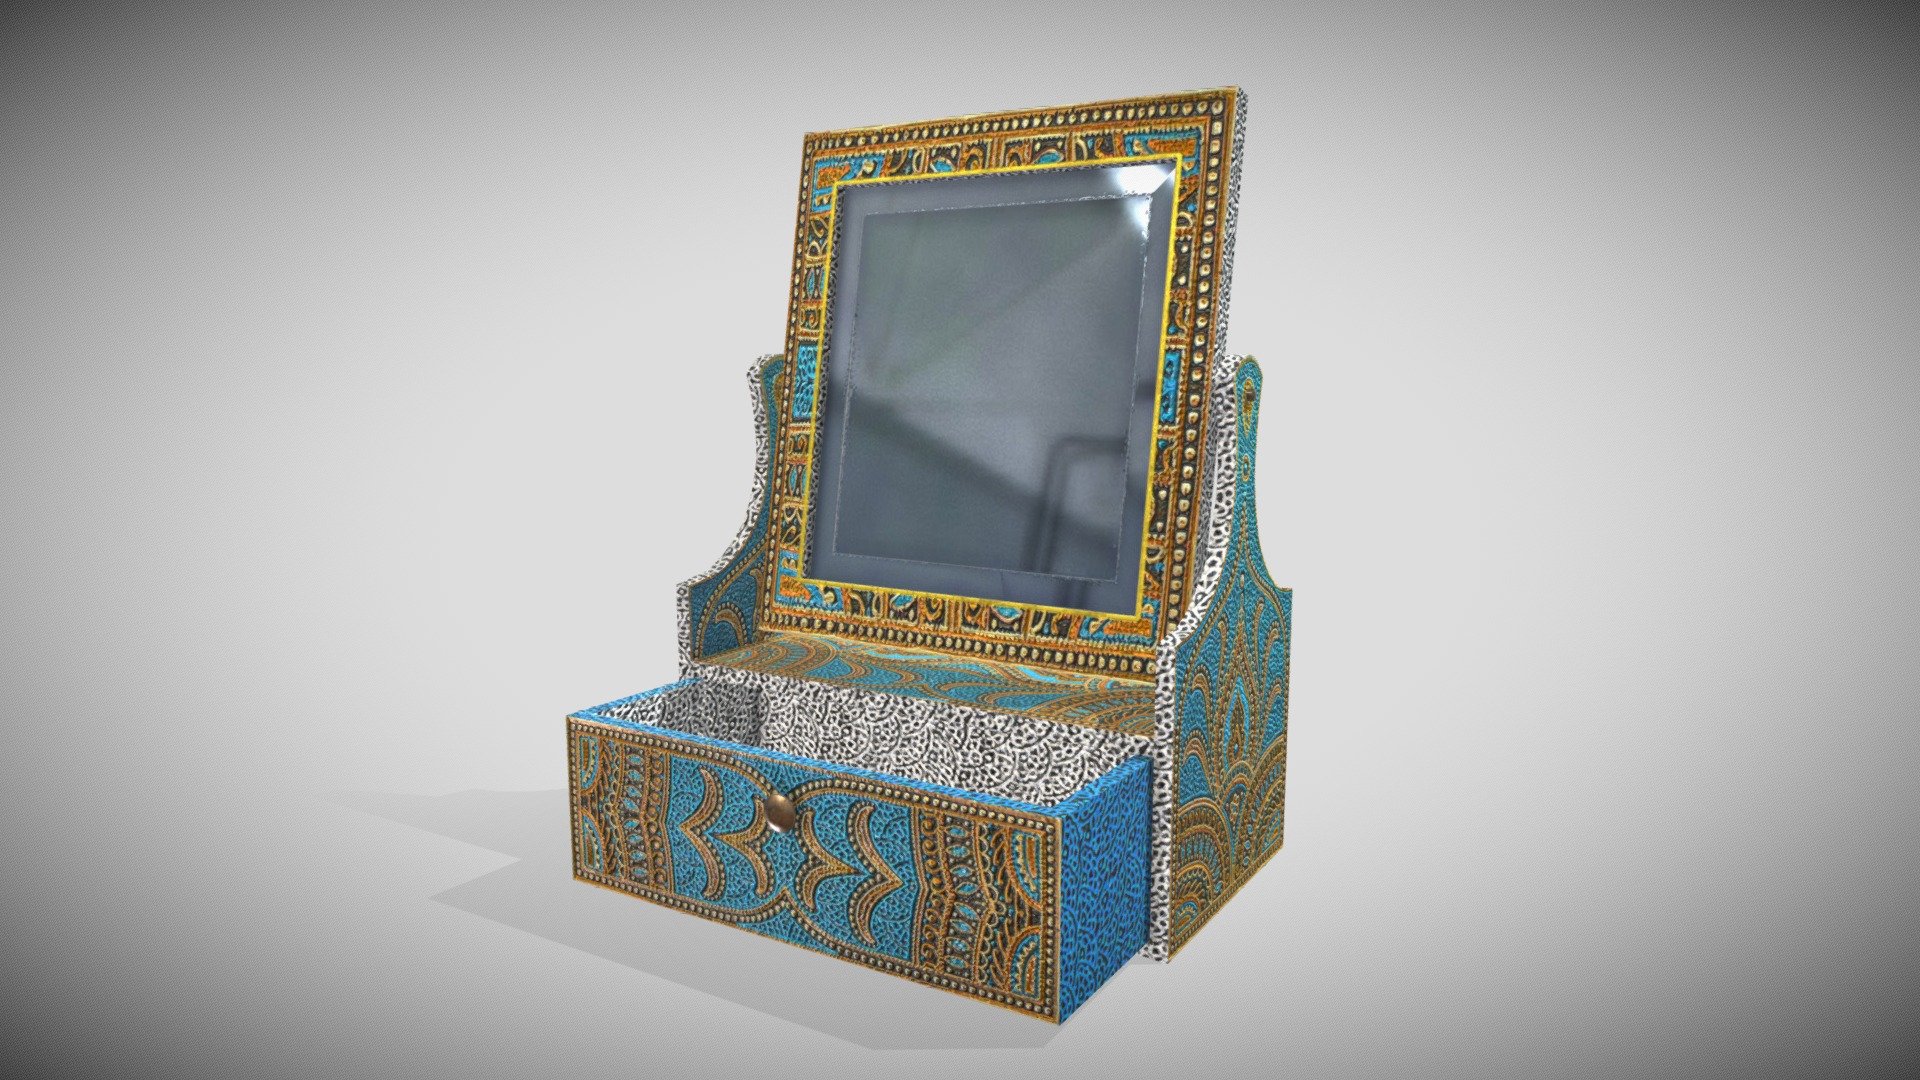 One Material PBR Metalness 4k

Quads - Desktop Mirror - Camir - Buy Royalty Free 3D model by Francesco Coldesina (@topfrank2013) 3d model